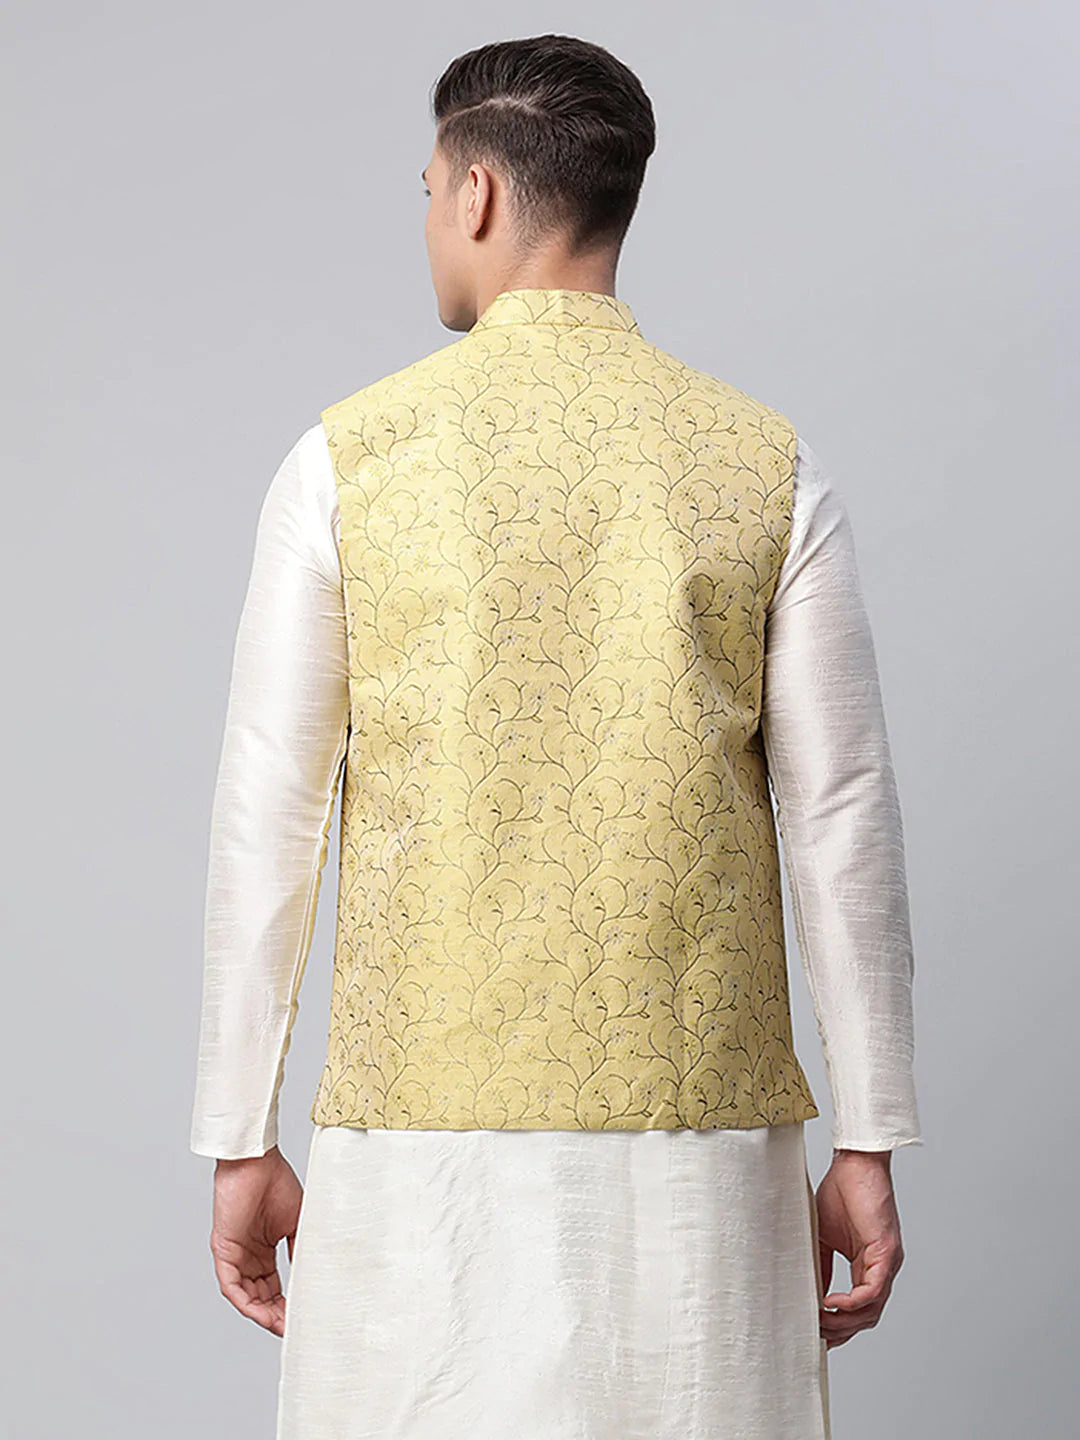 Men's Lemon Printed textured Nehru Jacket( JOWC 4039 Lemon )